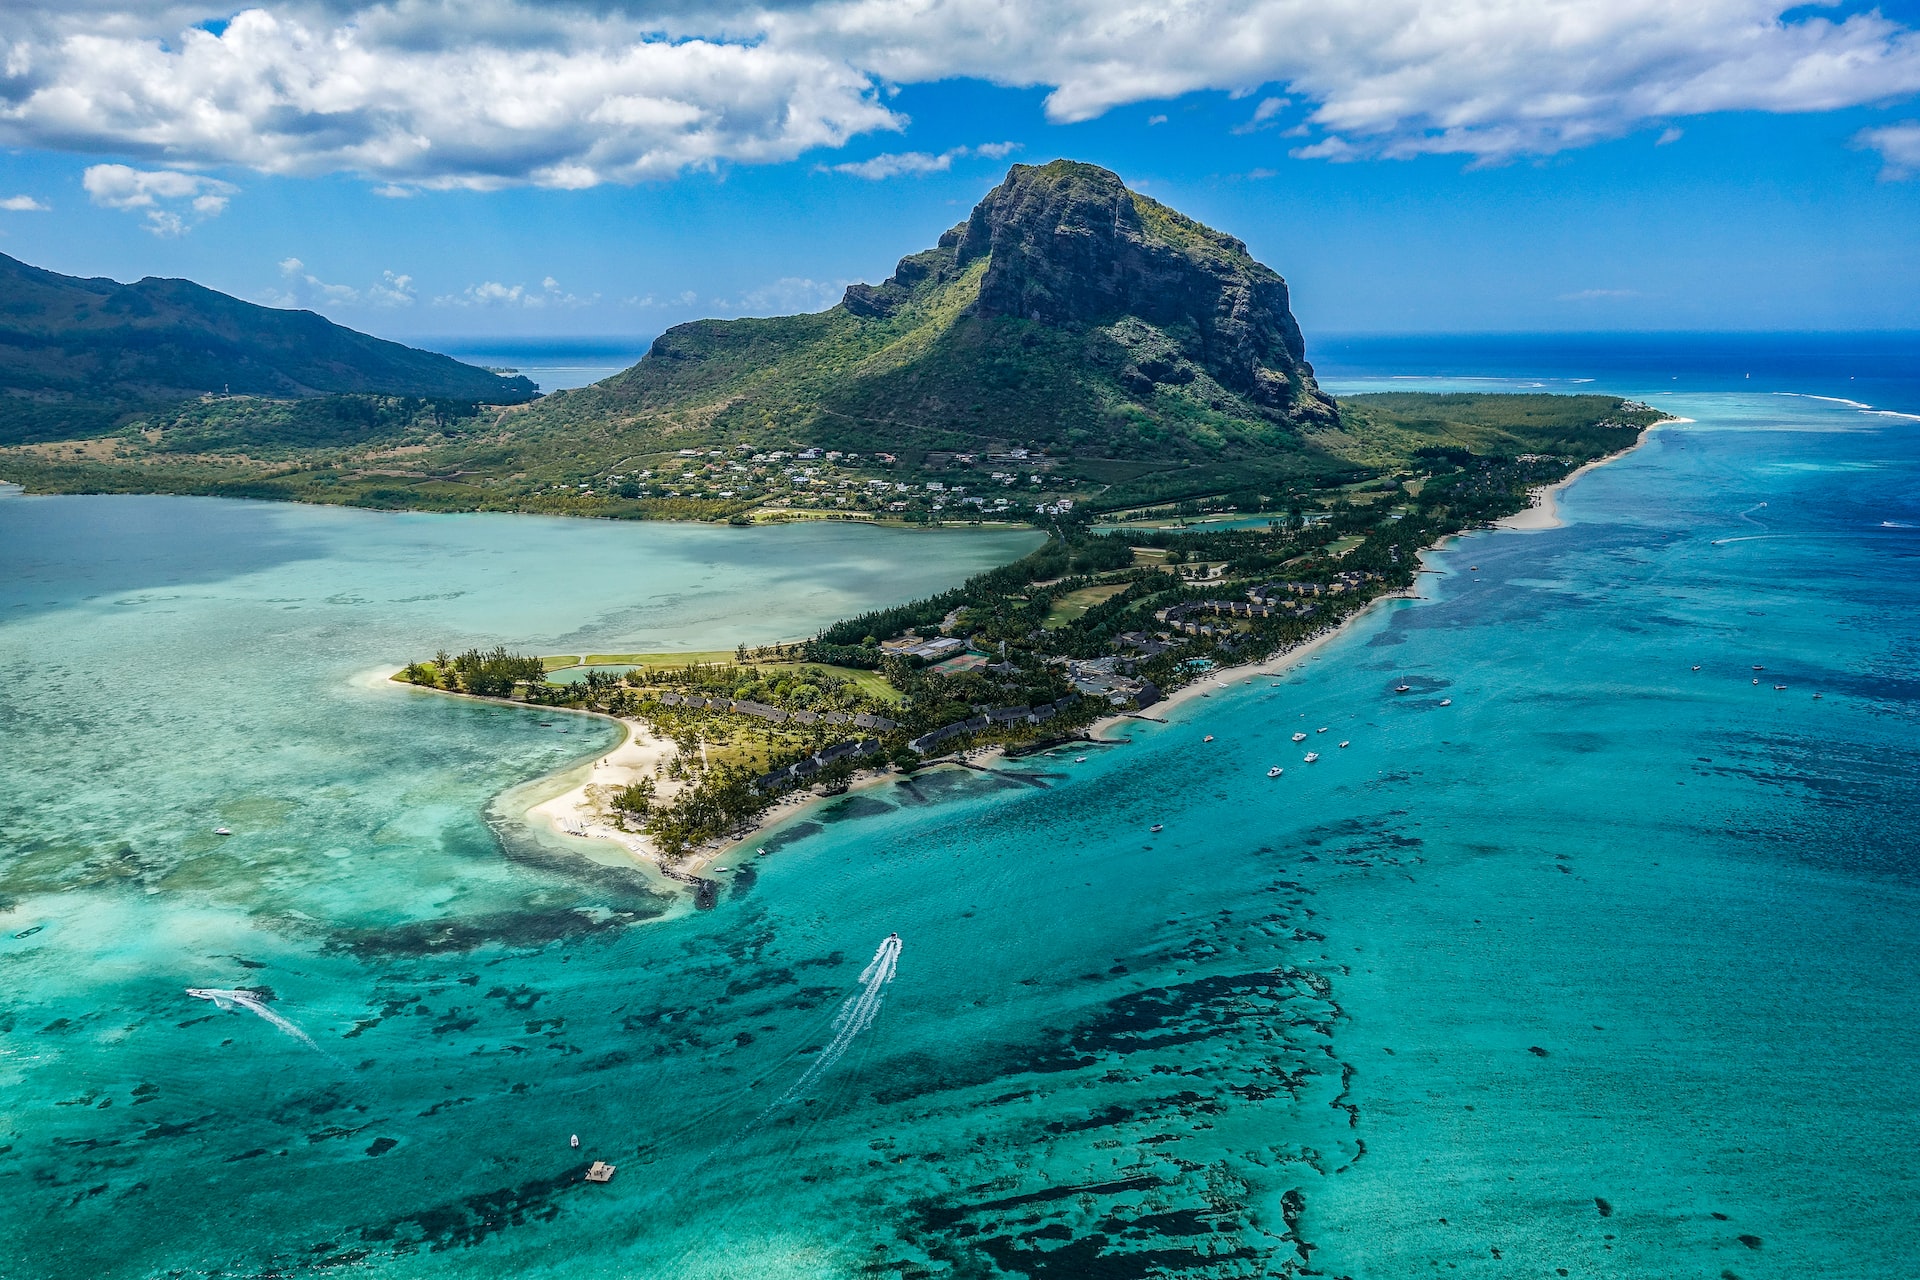 Image of Mauritius by Xavier Coiffic via Unsplash